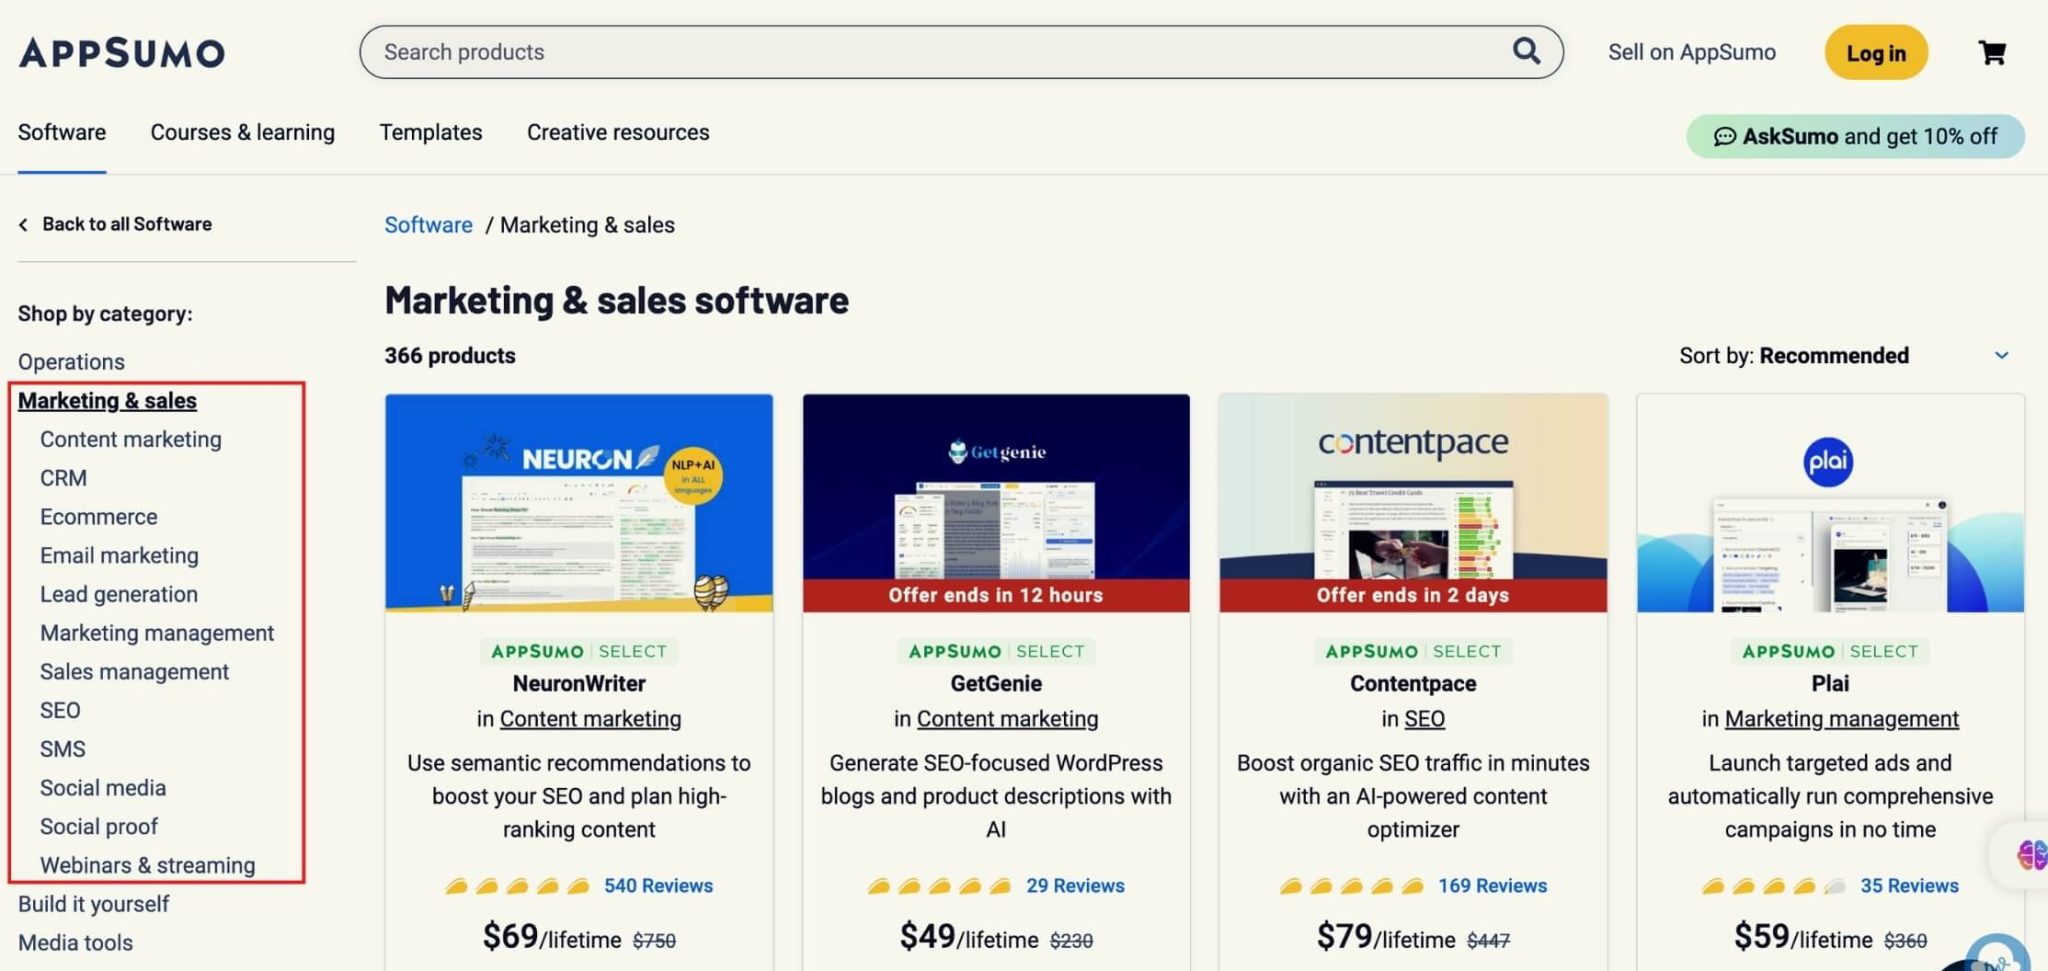 A screenshot of the appsumo website, marketing & sales